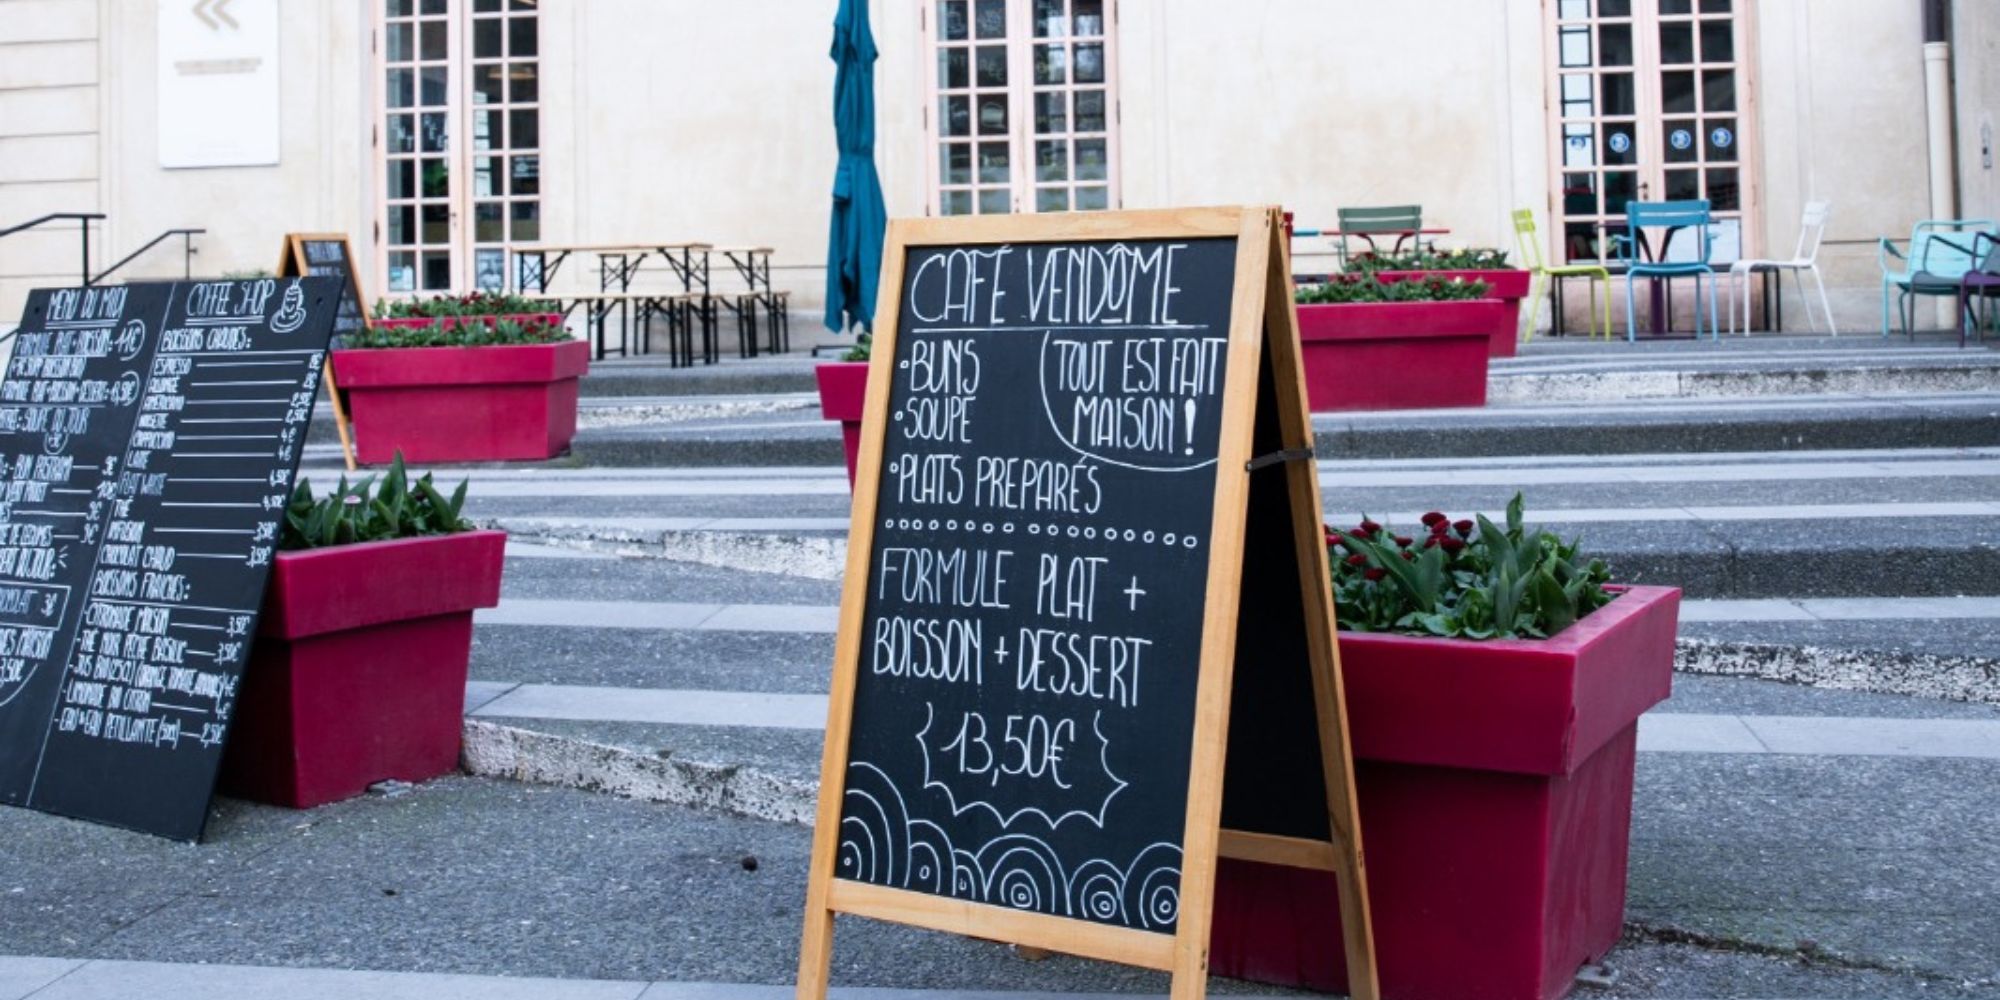 Brunch Café Vendôme (92110 Clichy)